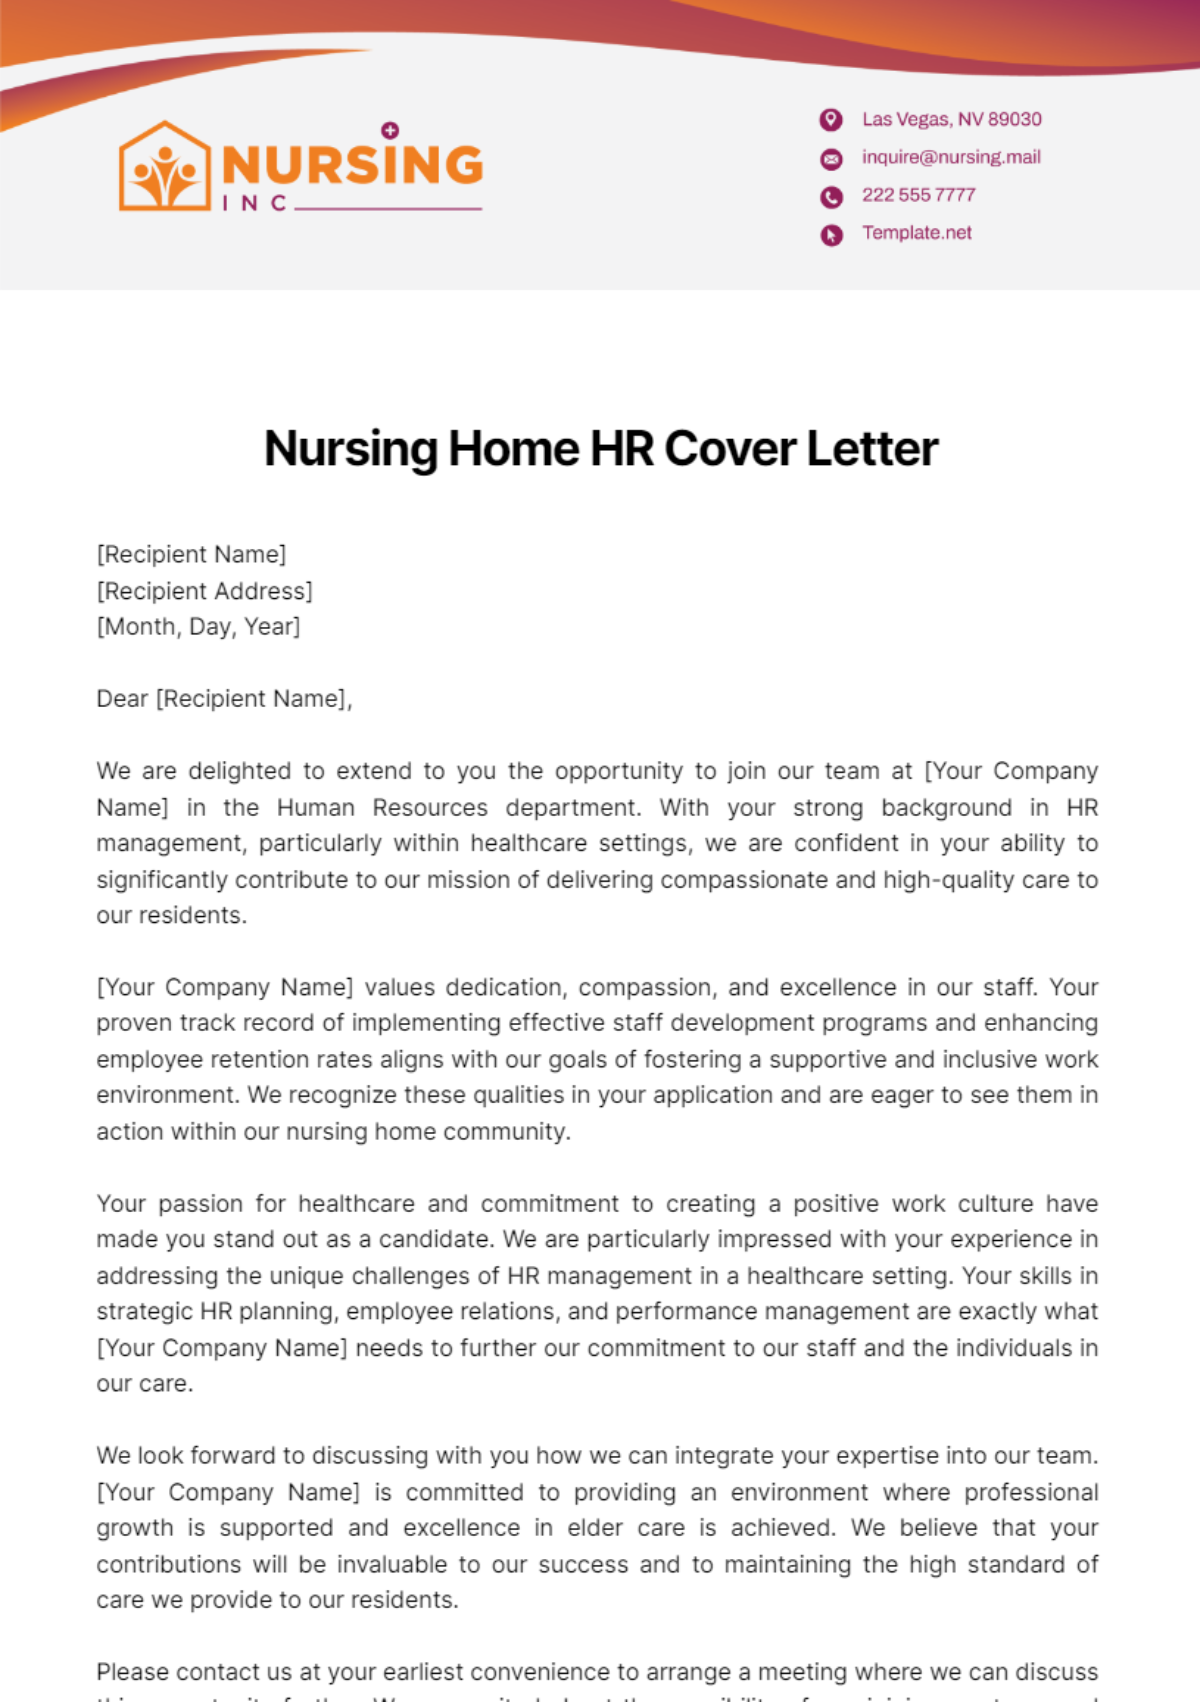 Nursing Home HR Cover Letter Template